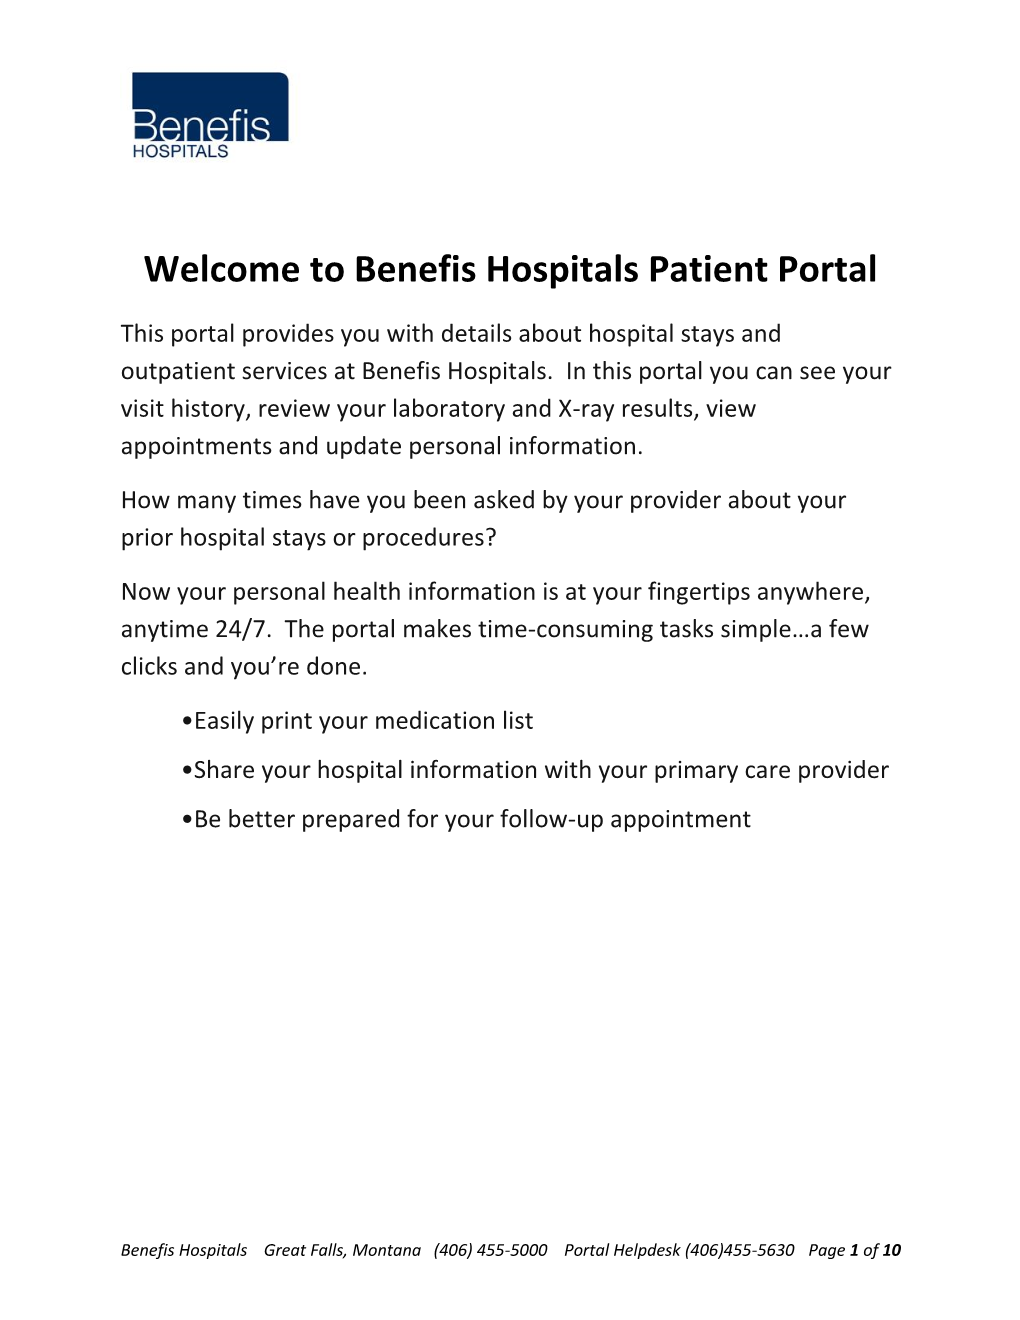 Benefis Hospitals Patient Portal